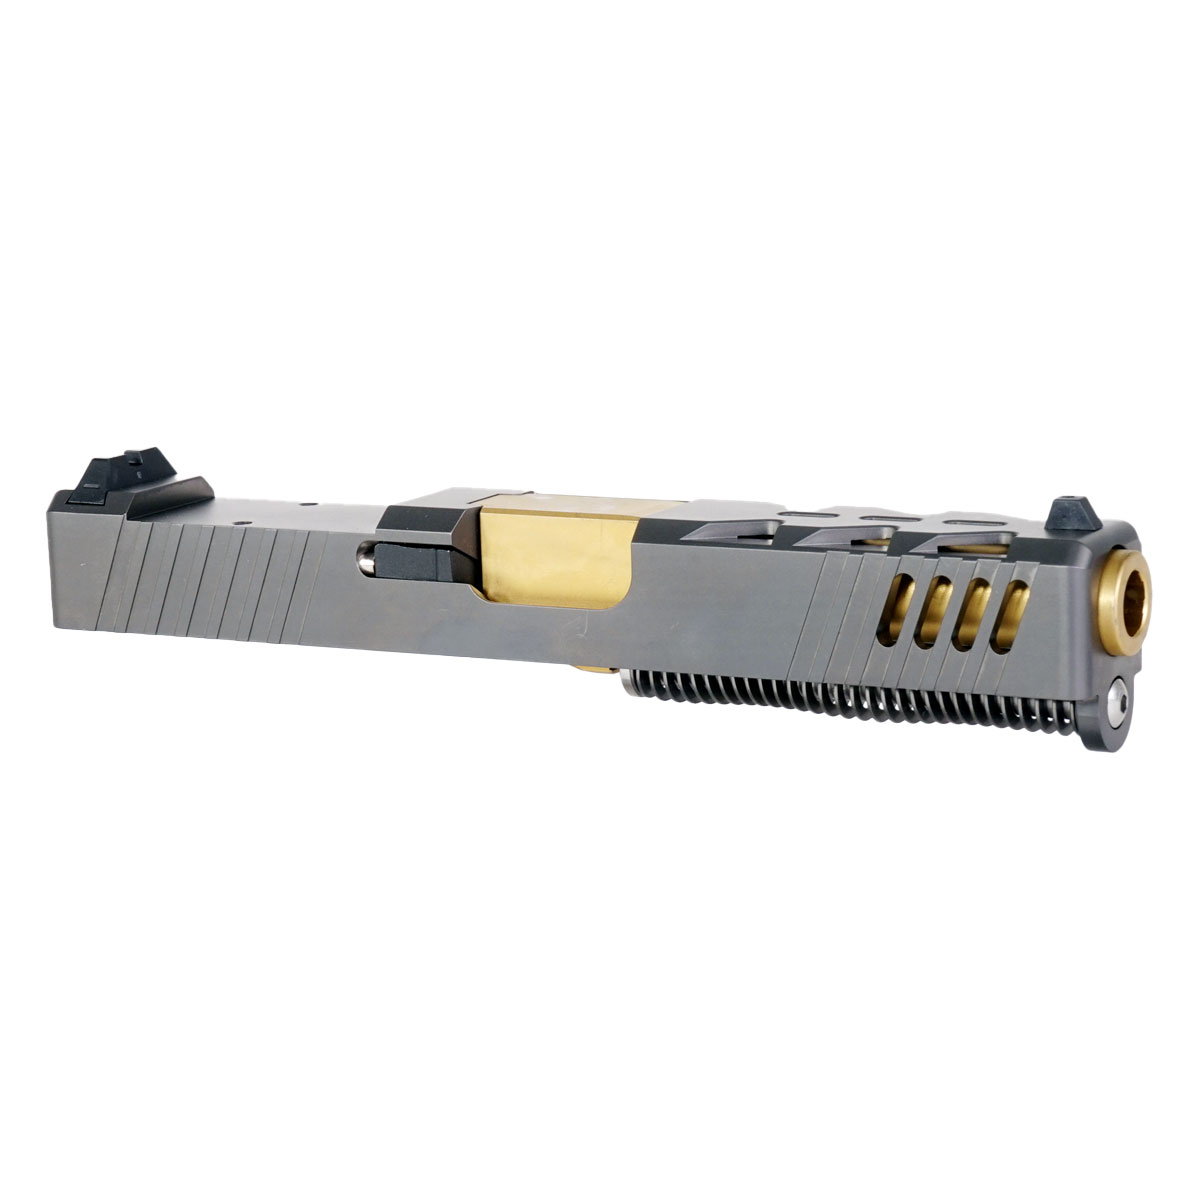 OTD 'The Talon' 9mm Complete Slide Kit - Glock 19 Gen 1-3 Compatible